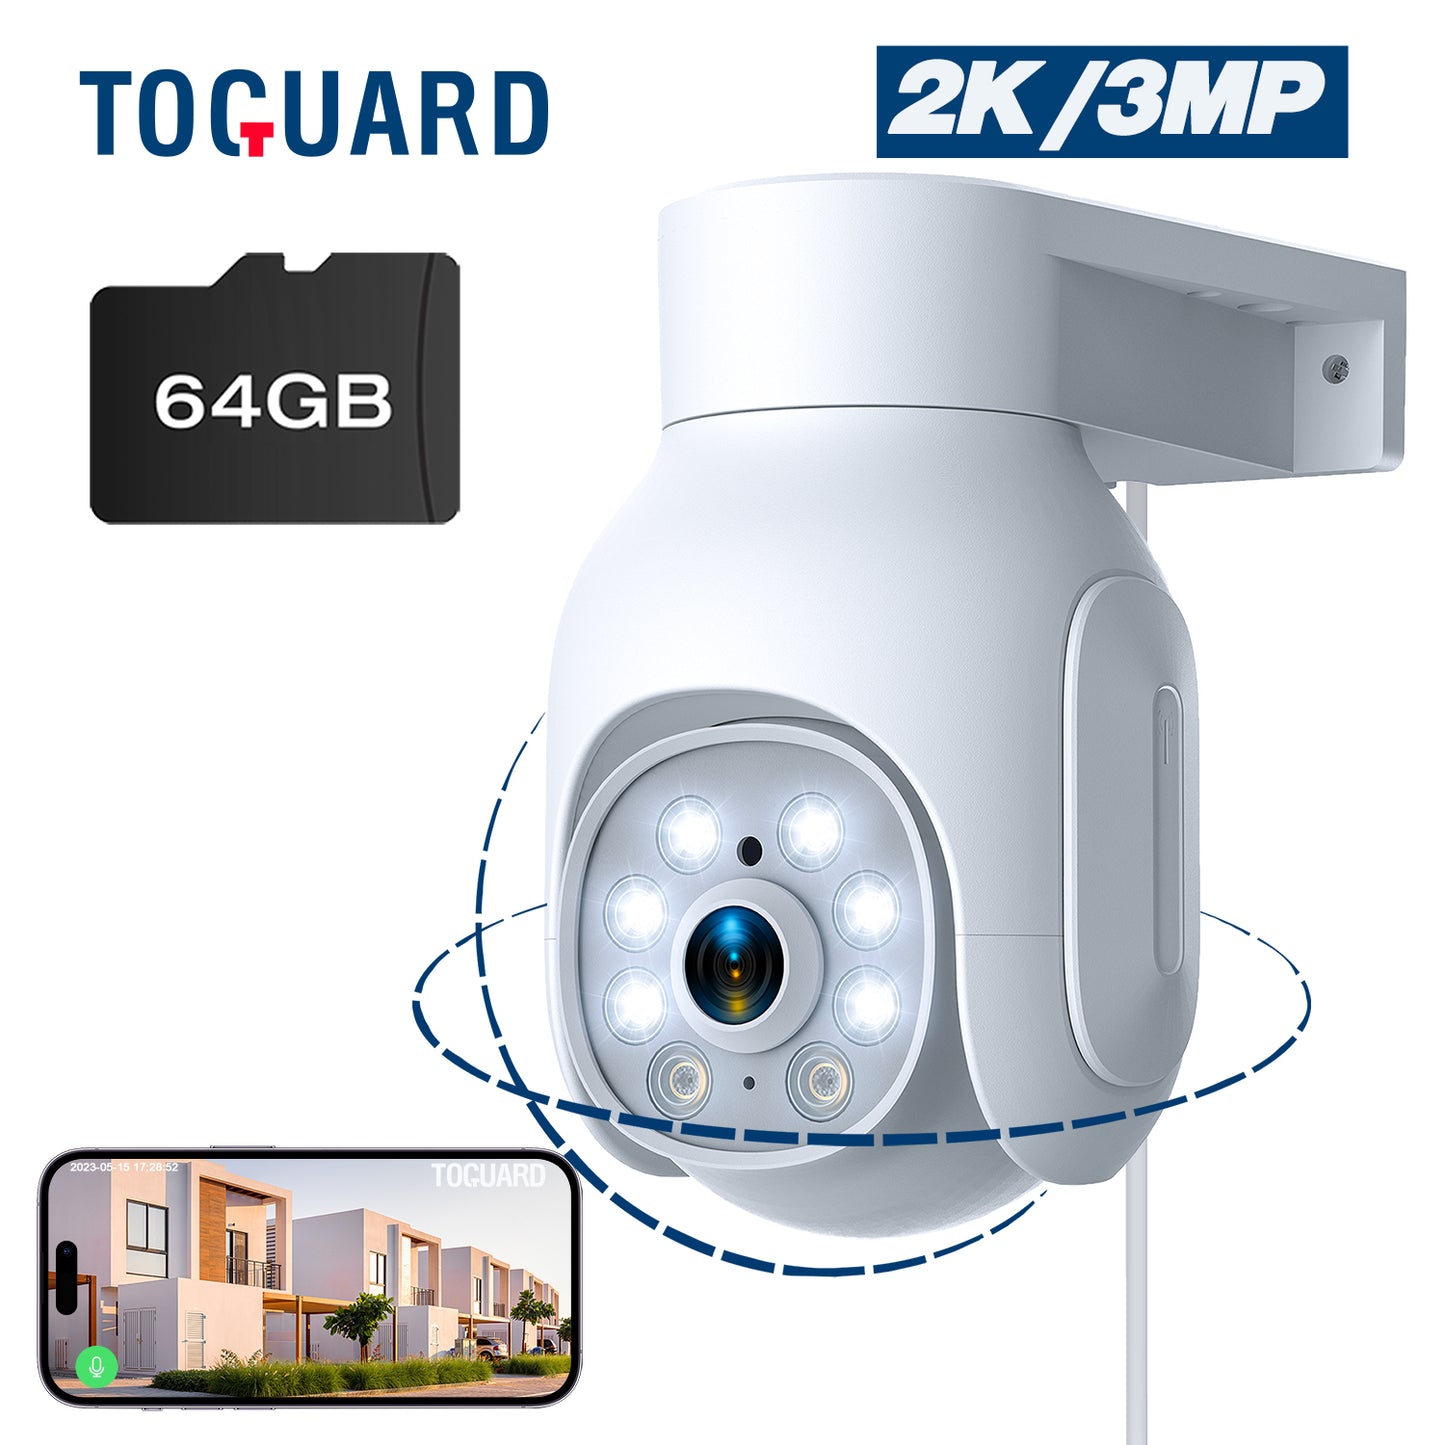 Toguard SC25 2K/3MP WiFi Security Camera Outdoor PTZ Wireless Dome Surveillance Camera